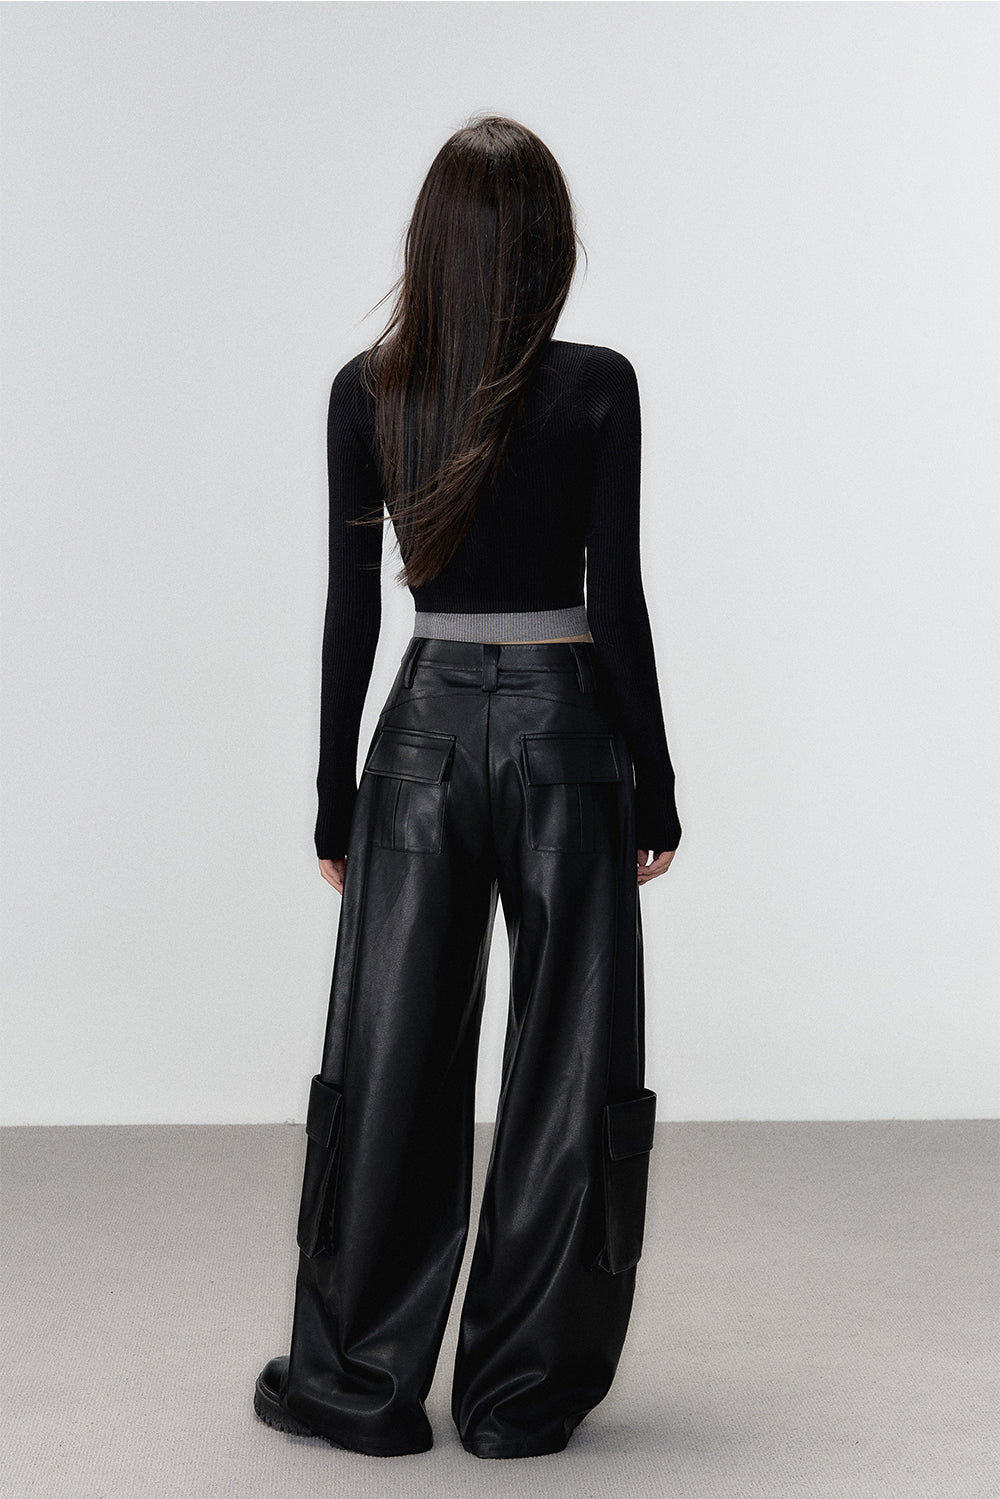 Black Rivet Straight Leather Pants - CHINASQUAD